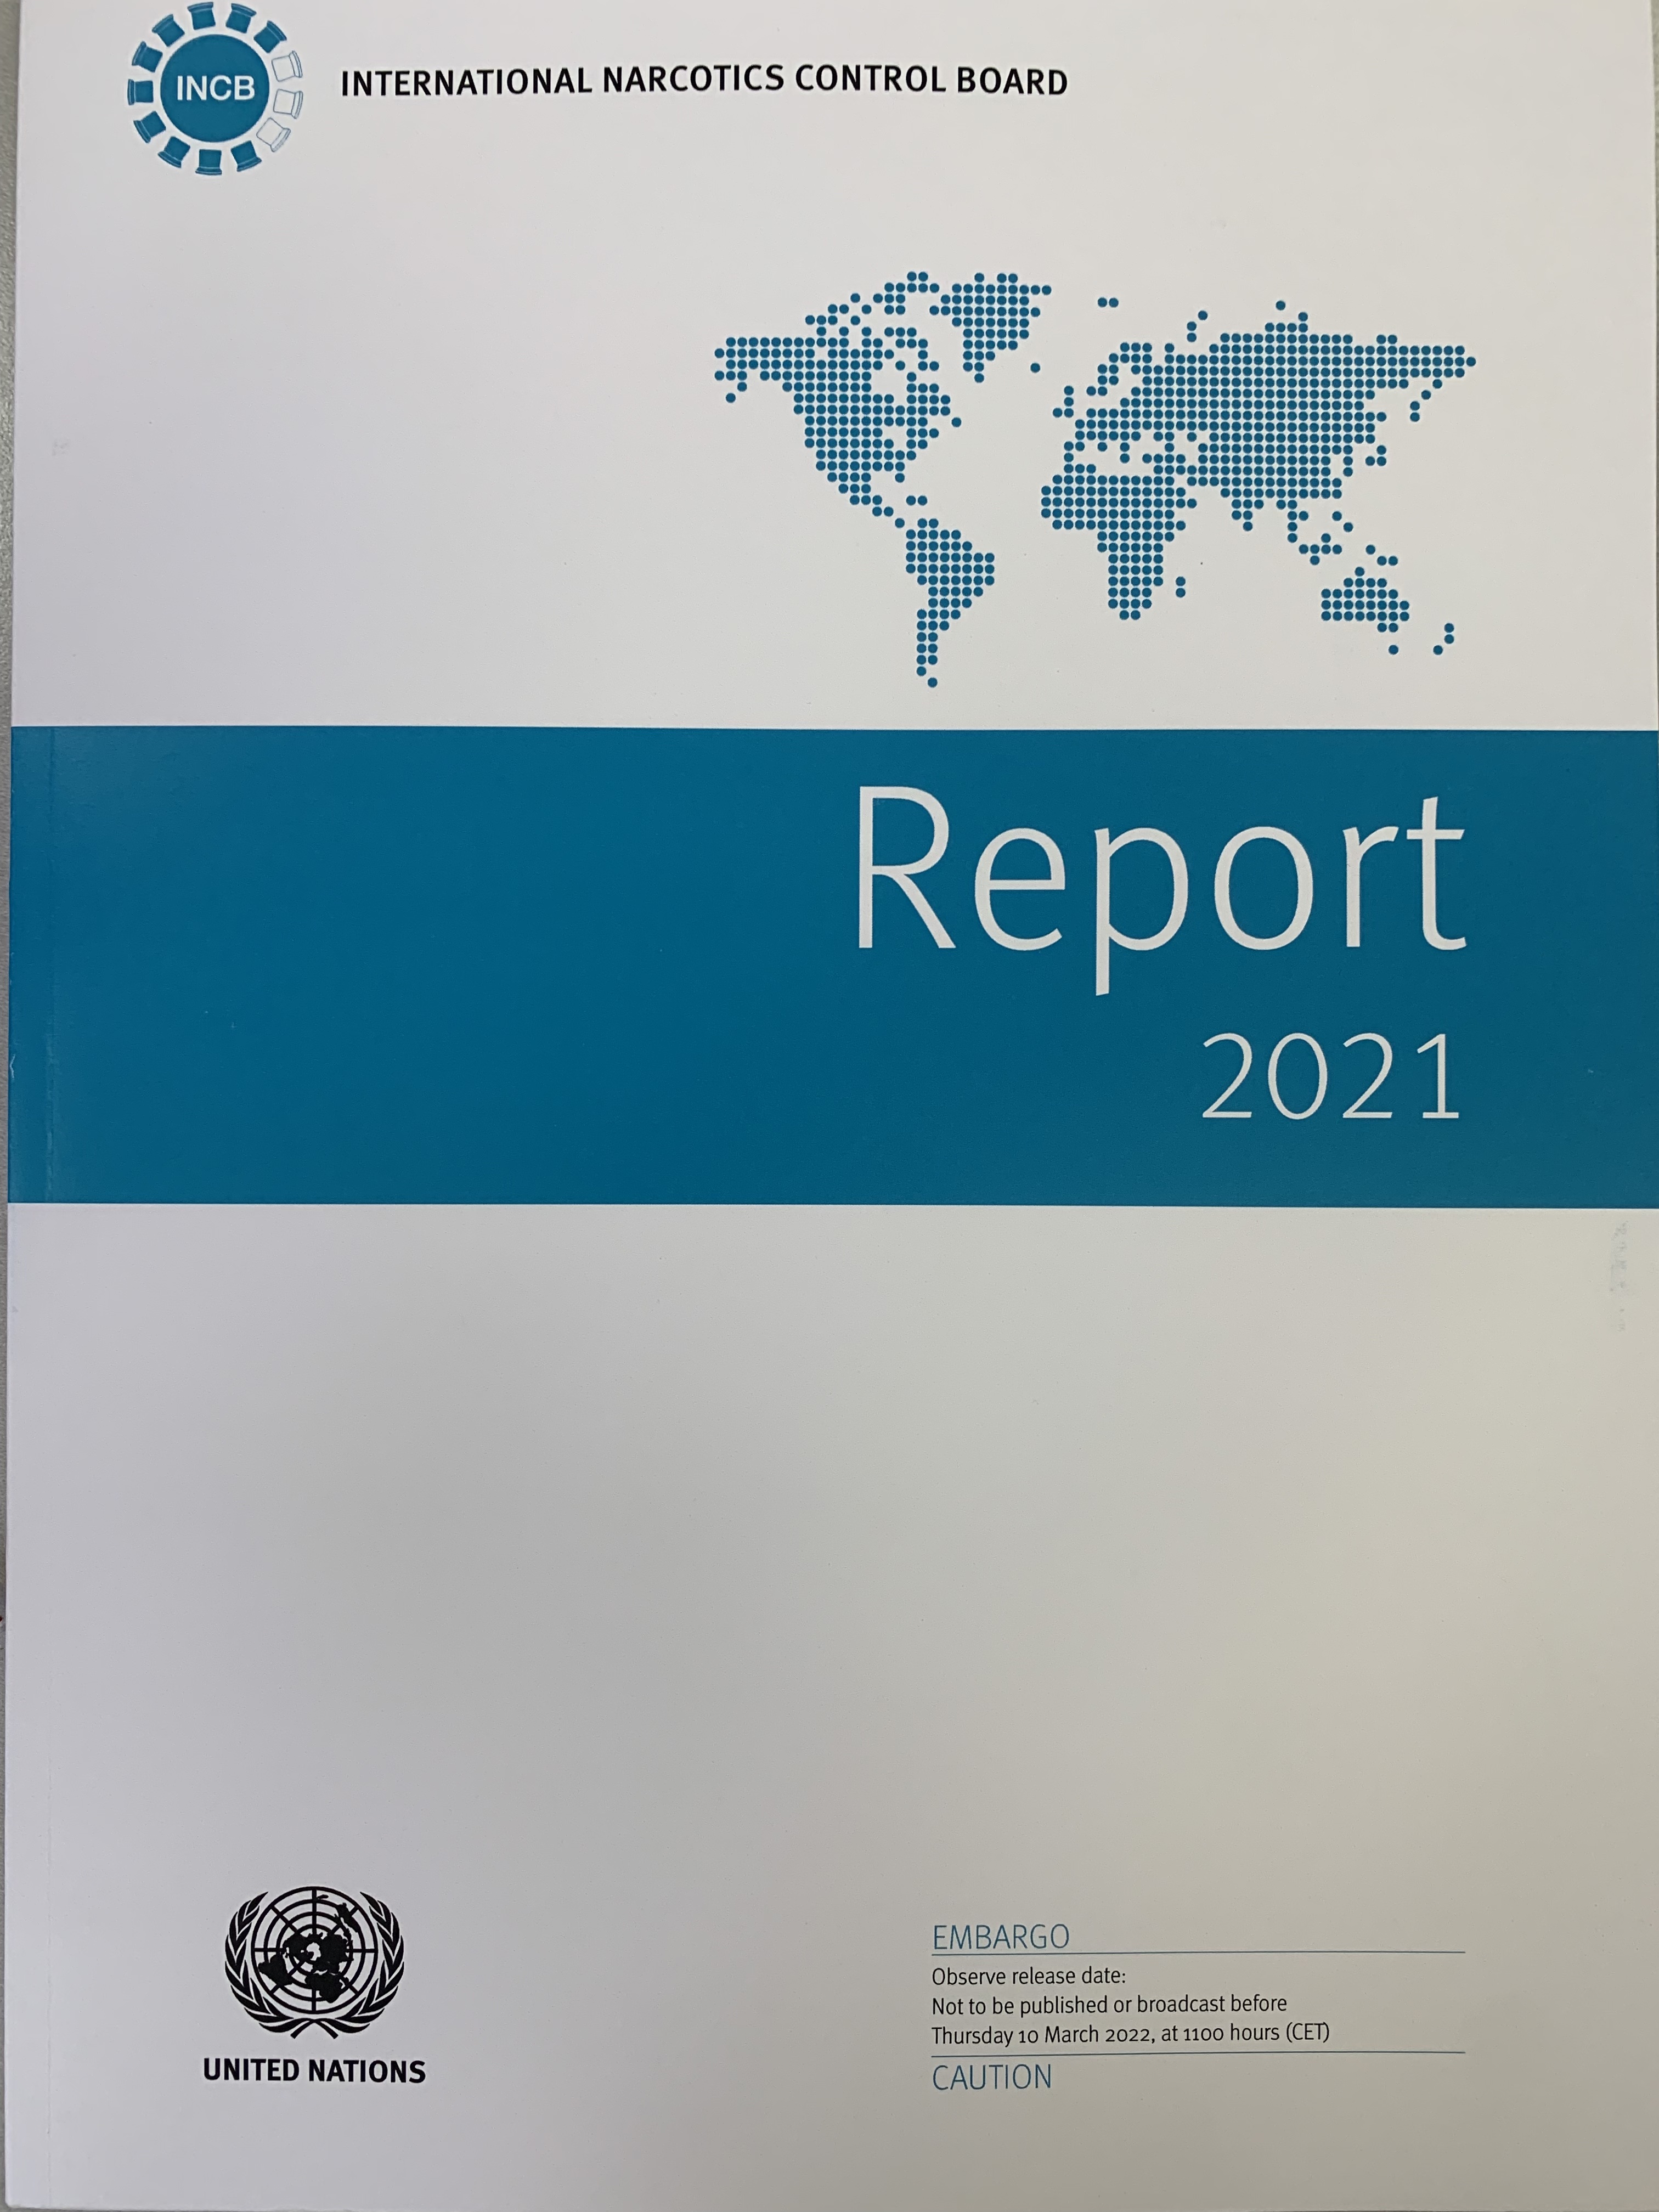 Informe 2021